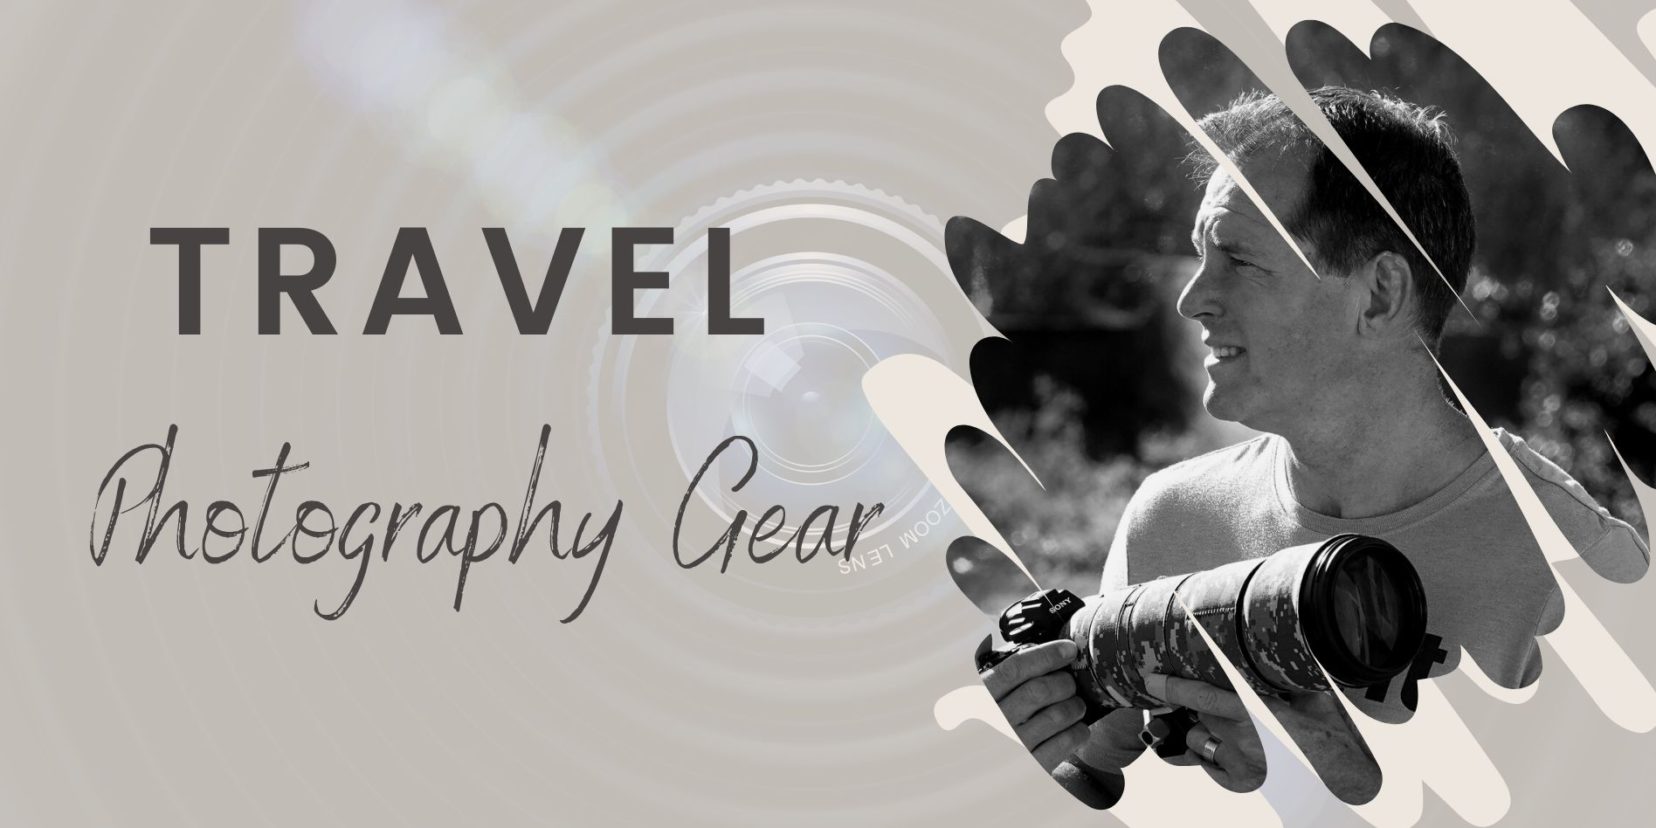 Travel photography gear header